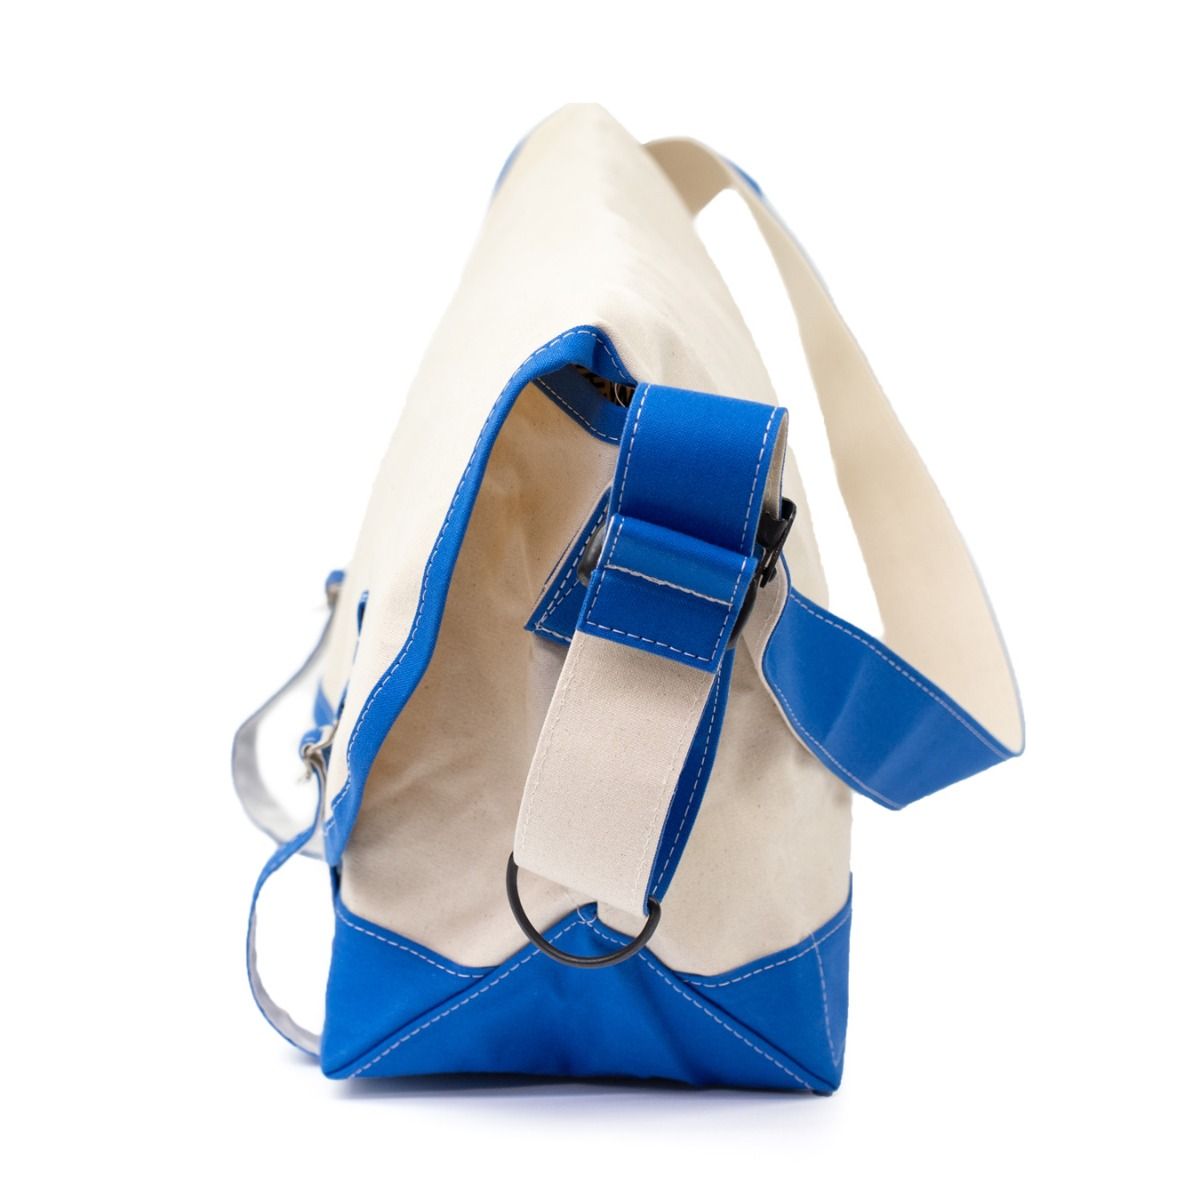 THE INCONVENIENCE STORE×BLUE LUG Messenger Bag - Blue